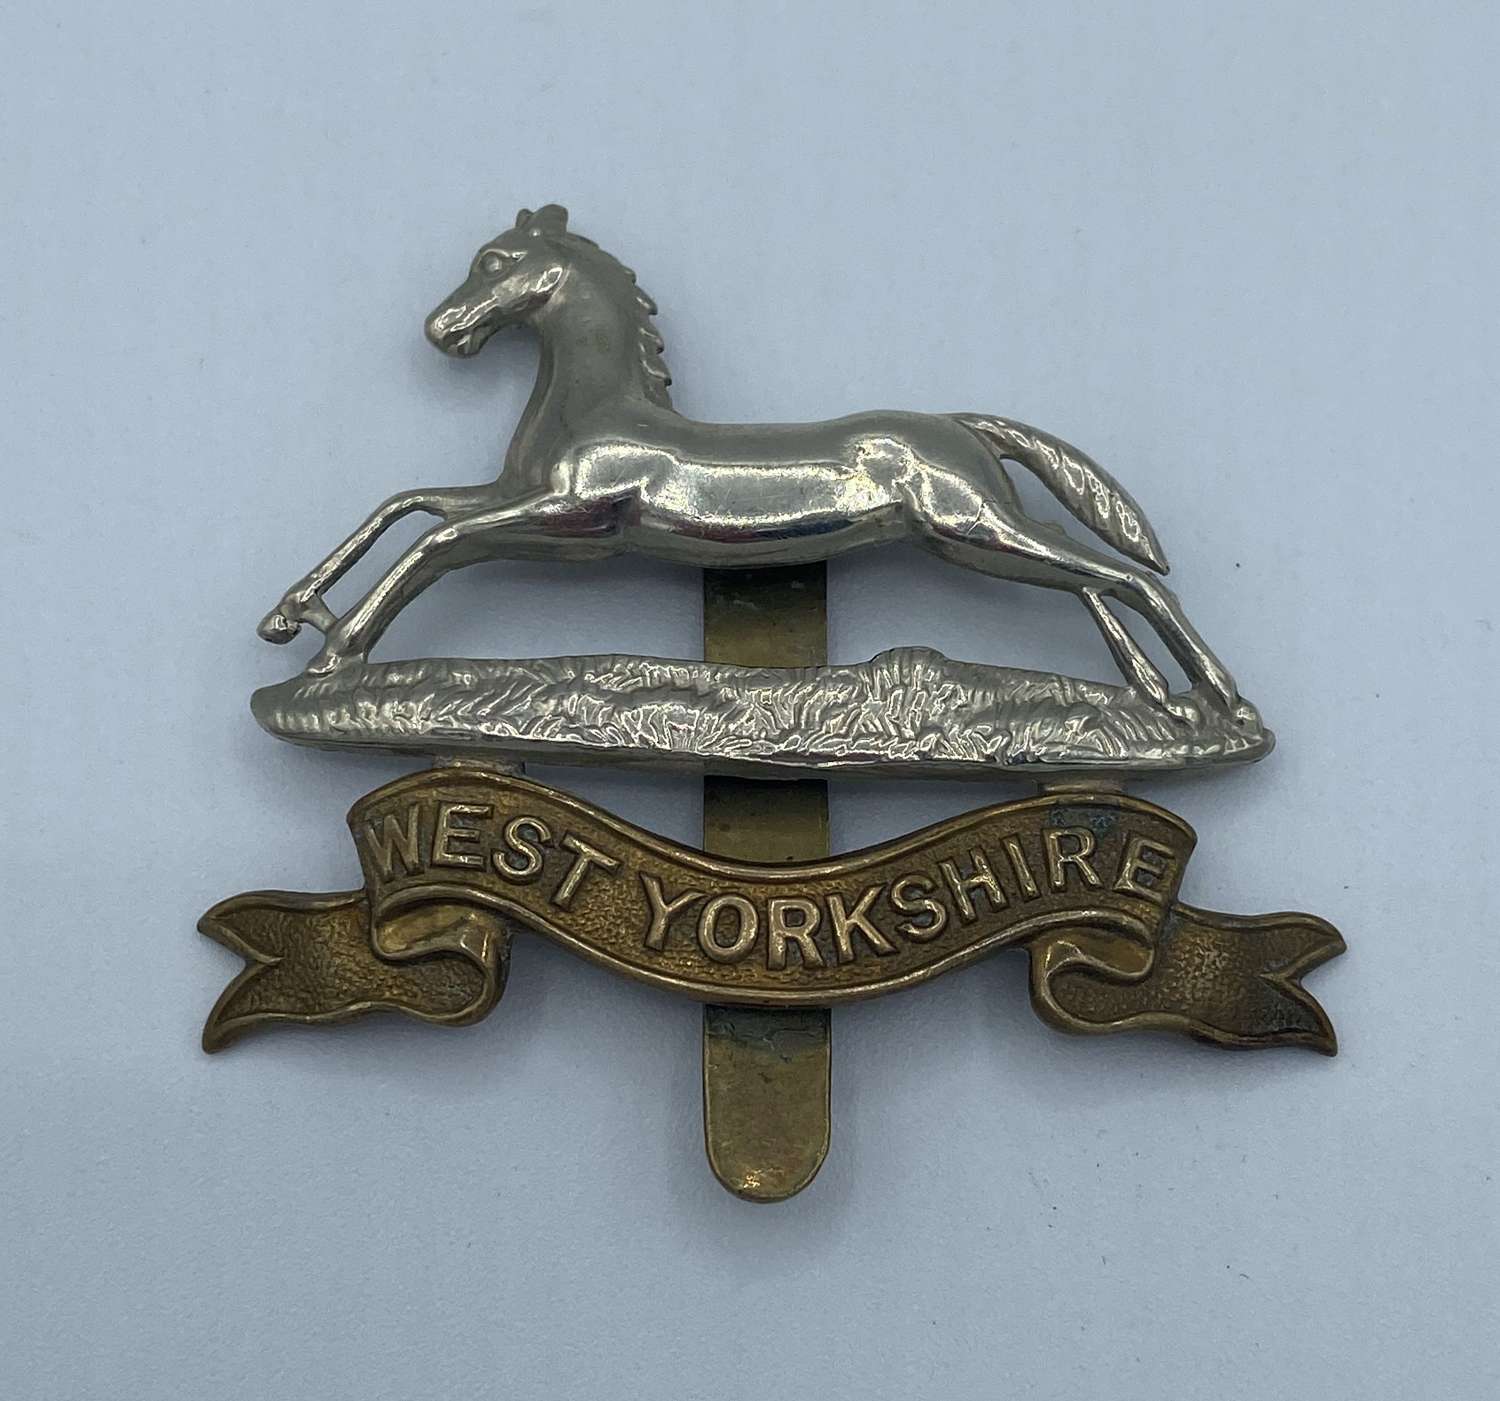 WW2 West Yorkshire Slider Cap Badge